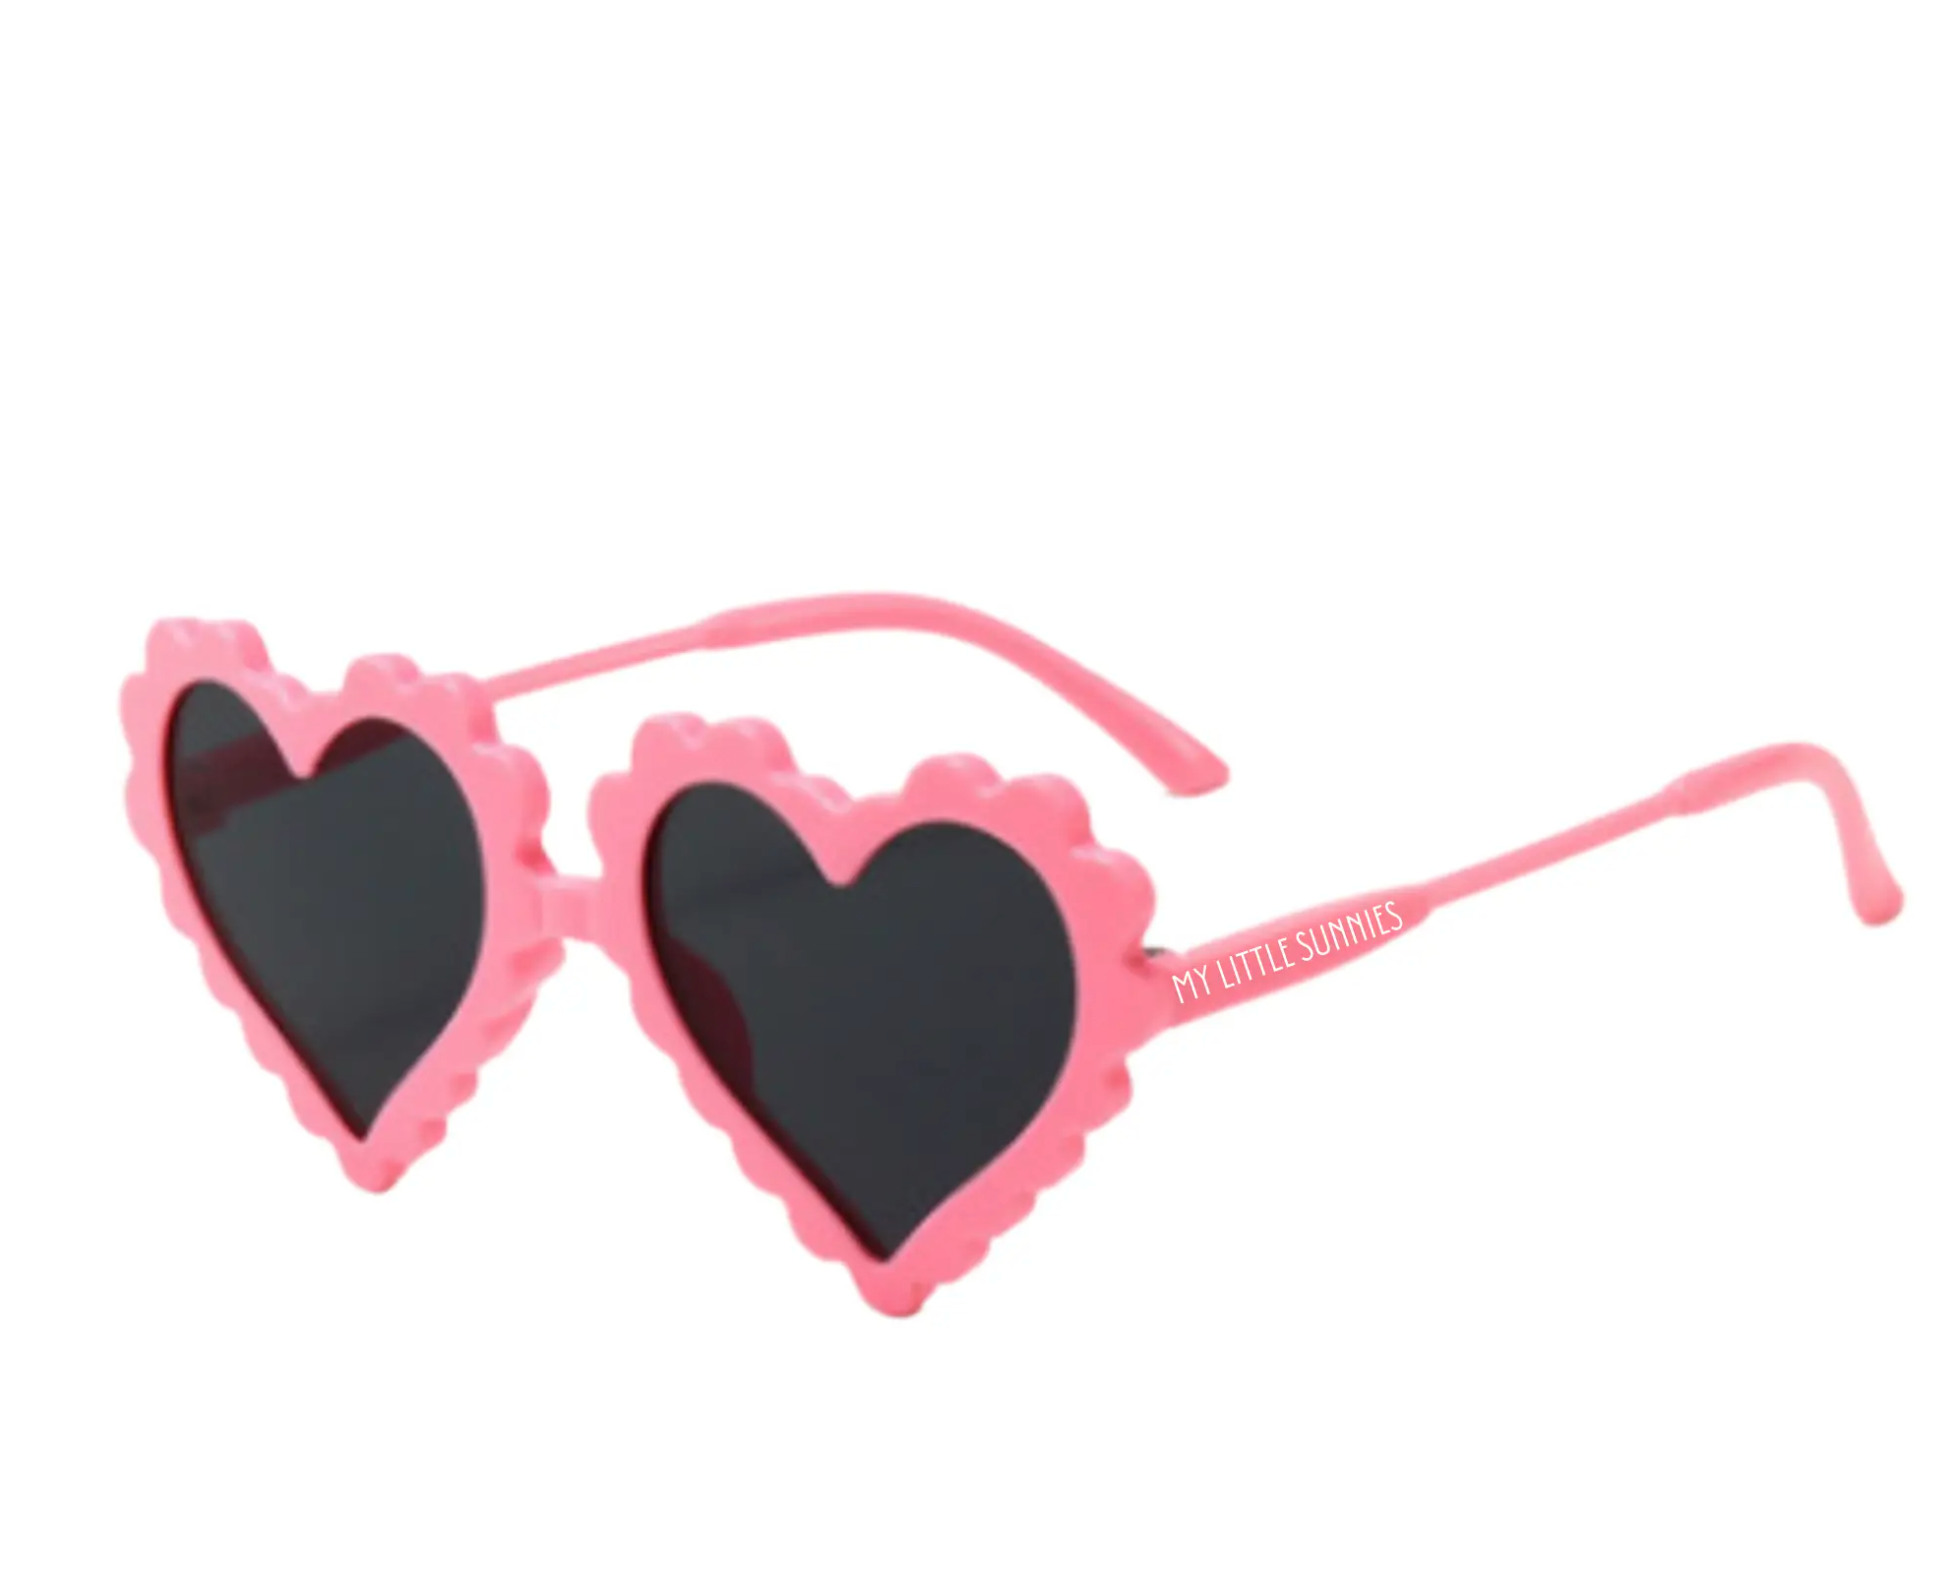 Tenth & Pine Heart Sunglasses - Bubblegum Pink